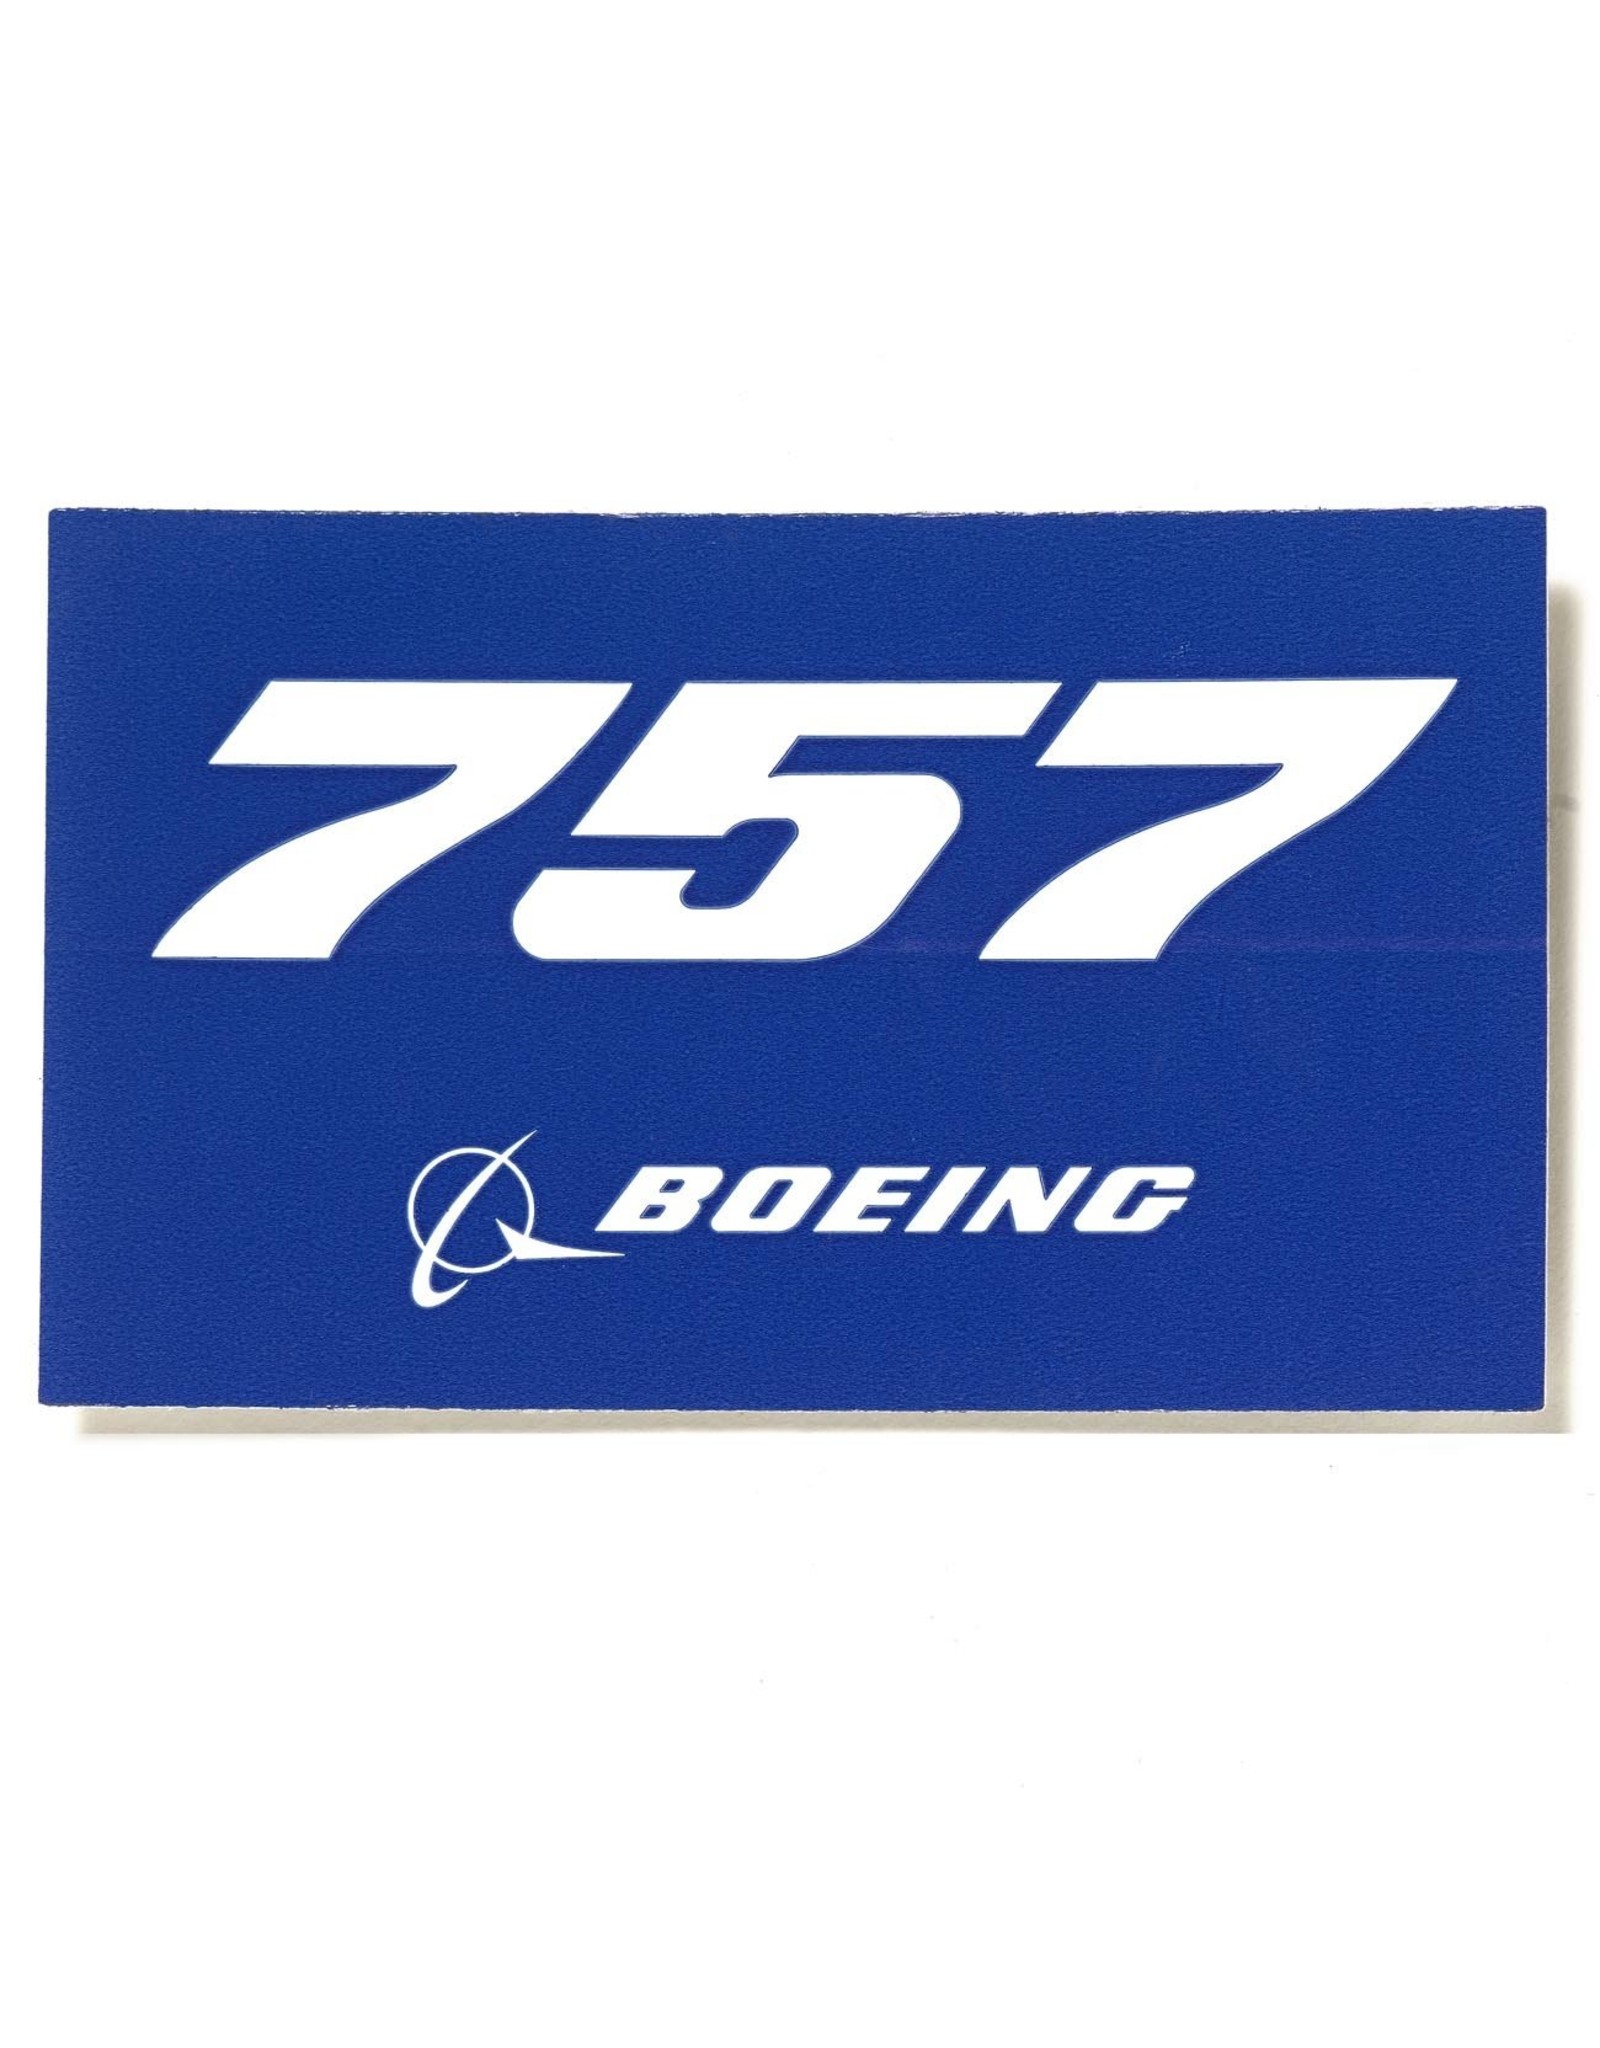 Sticker 757 rectangle